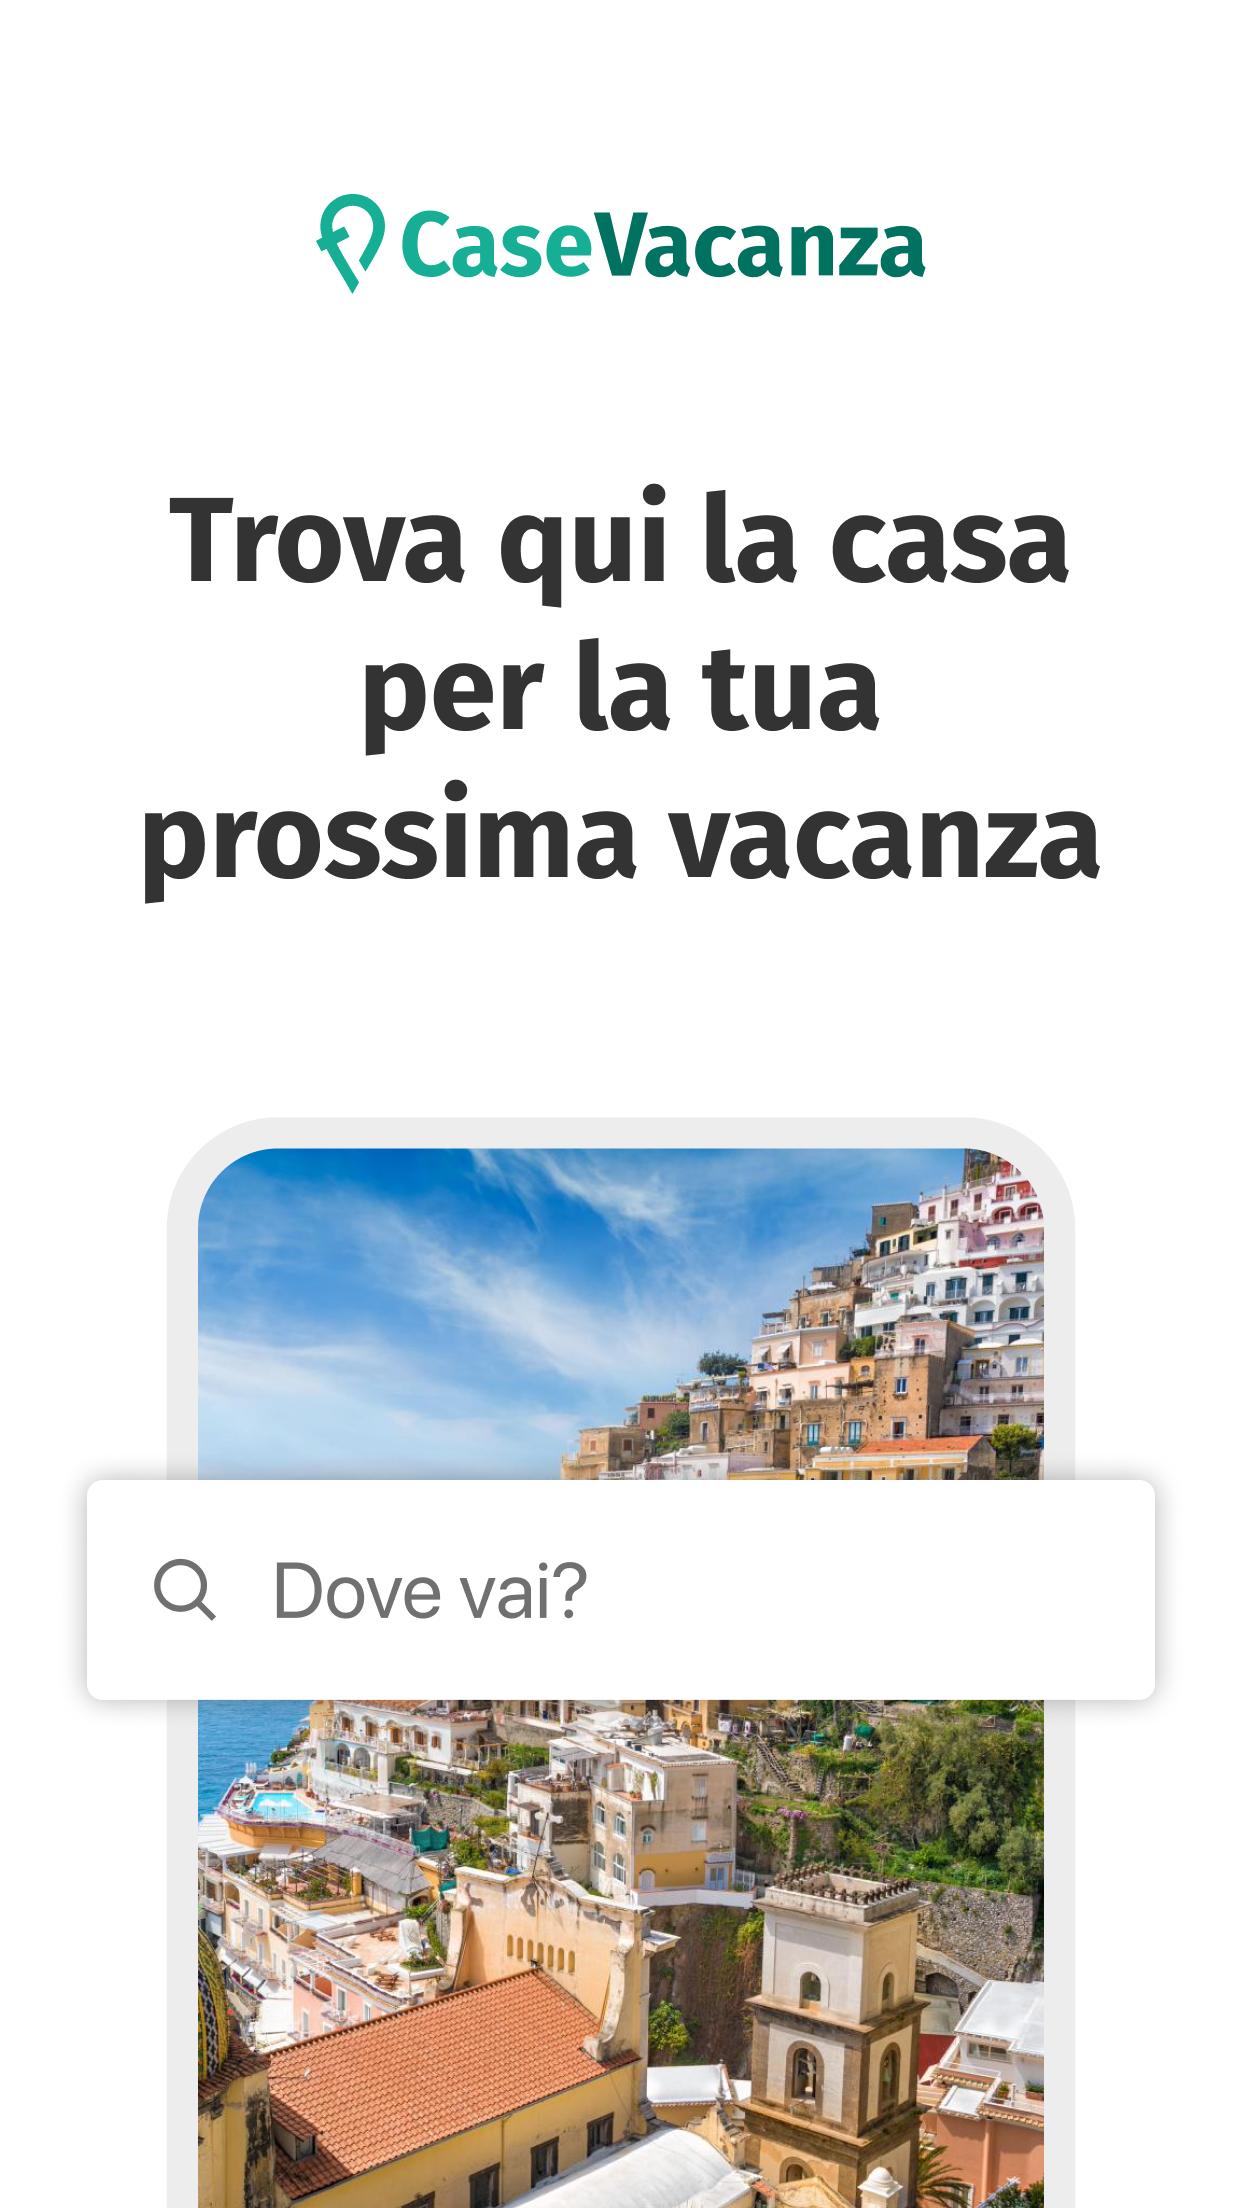 CaseVacanza.it Cerca case vacanza in affitto 1.2.0 Screenshot 7